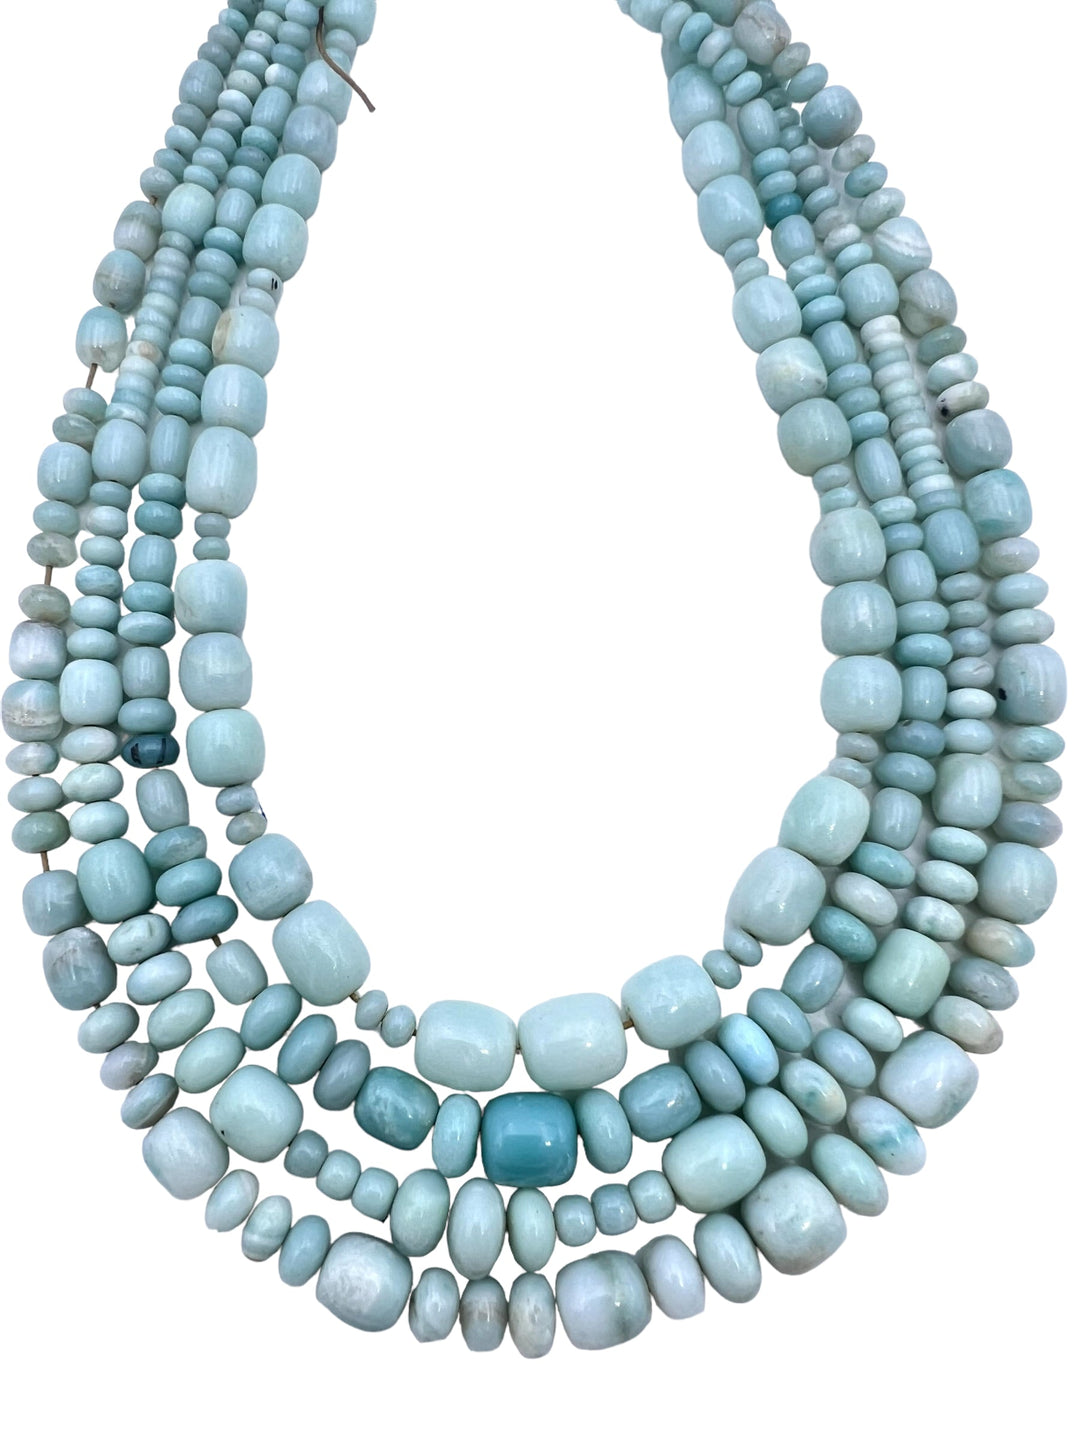 Amazonite Mixed Shape Designer Beads Strands 16 inch strand